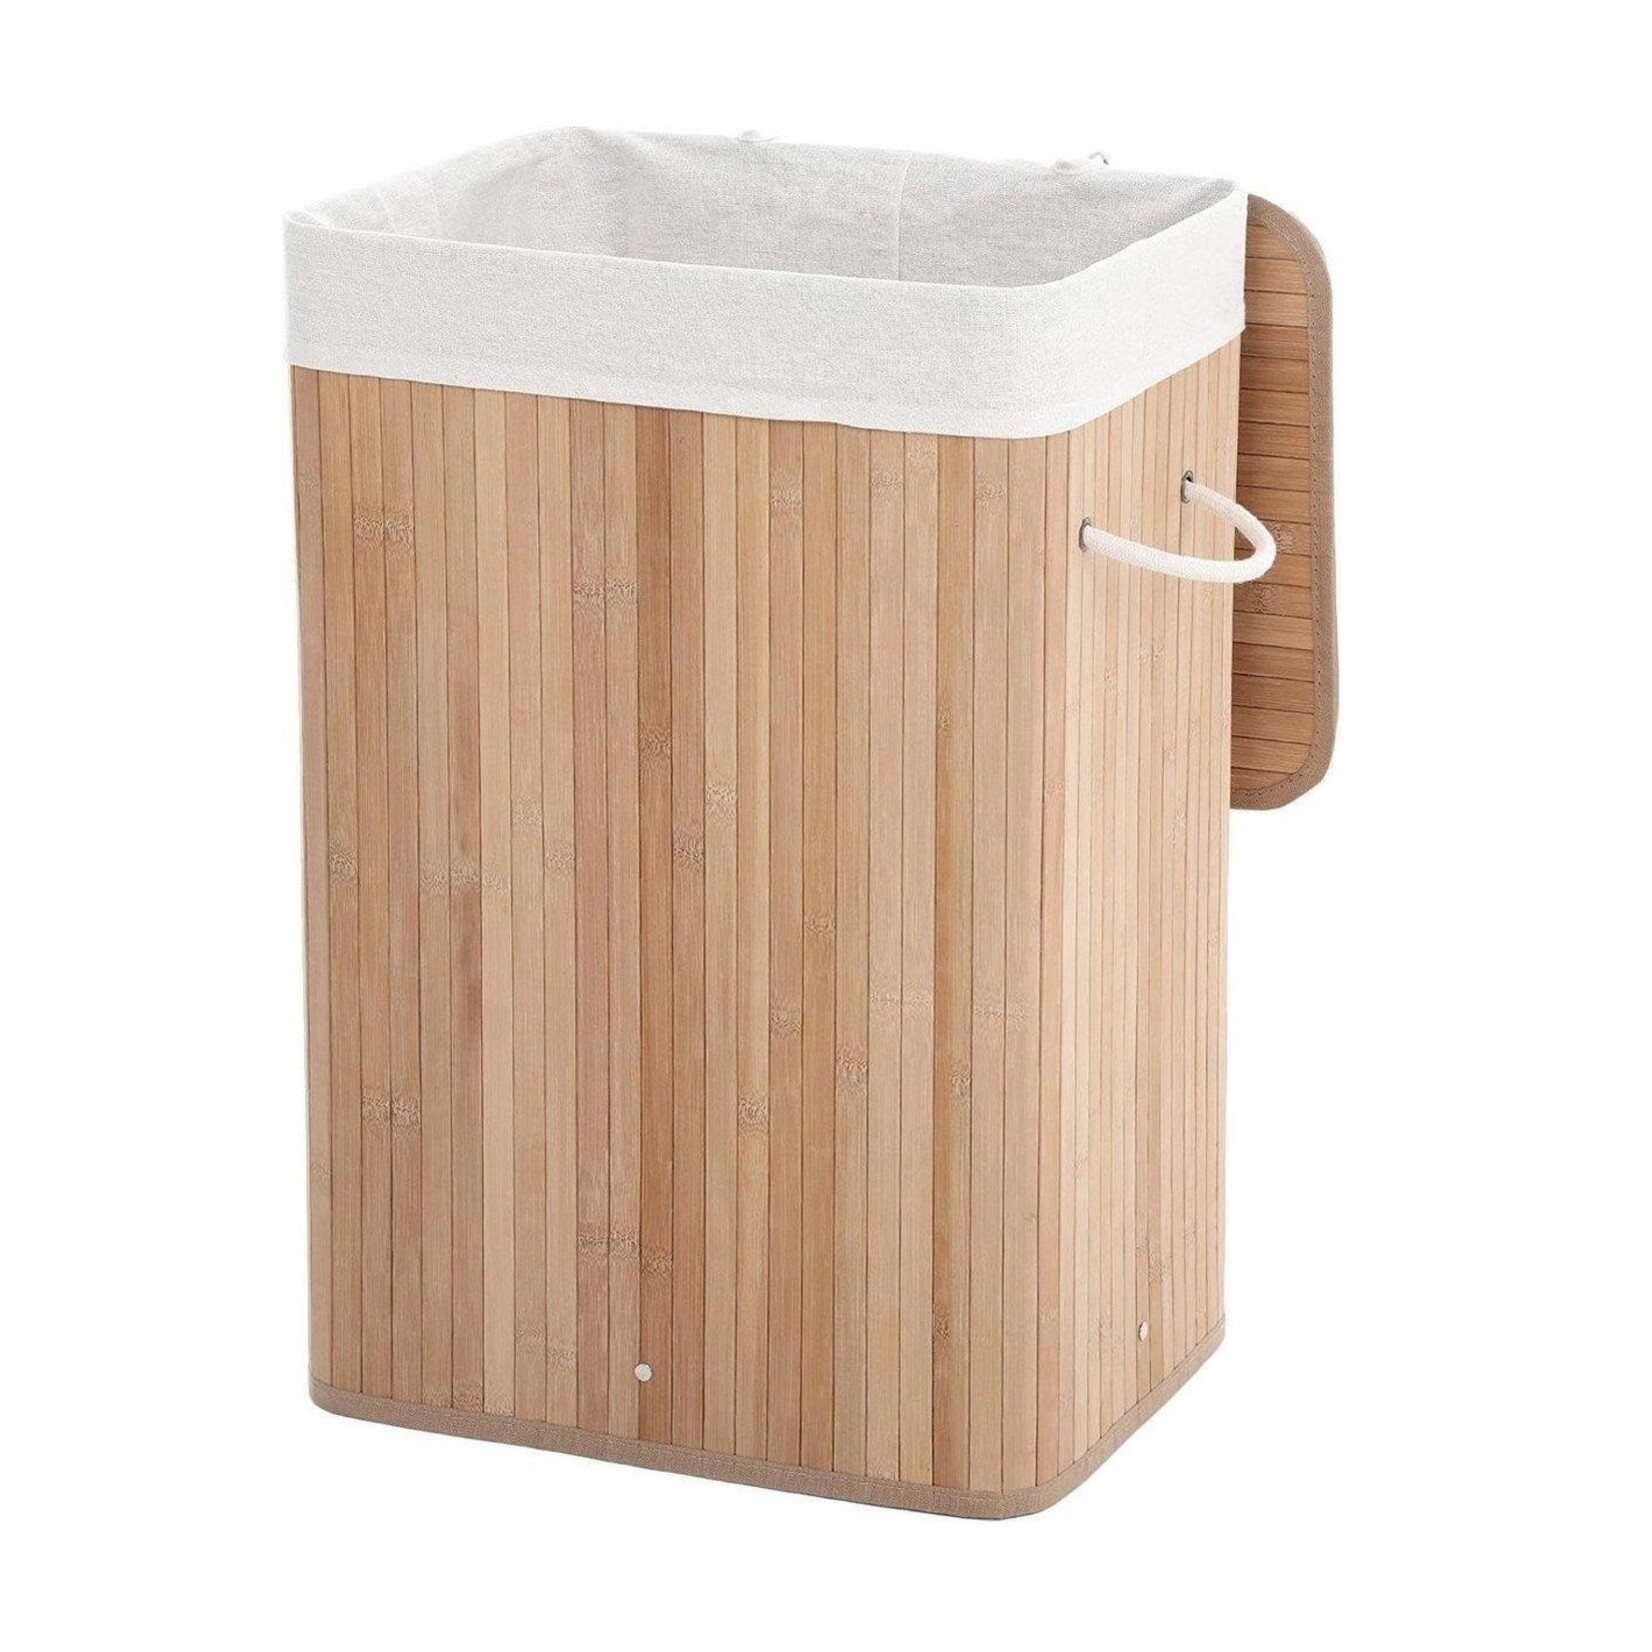 Bobbel Home Bobbel Home - Laundry Basket - Bamboo - 72 Liter - Light Brown